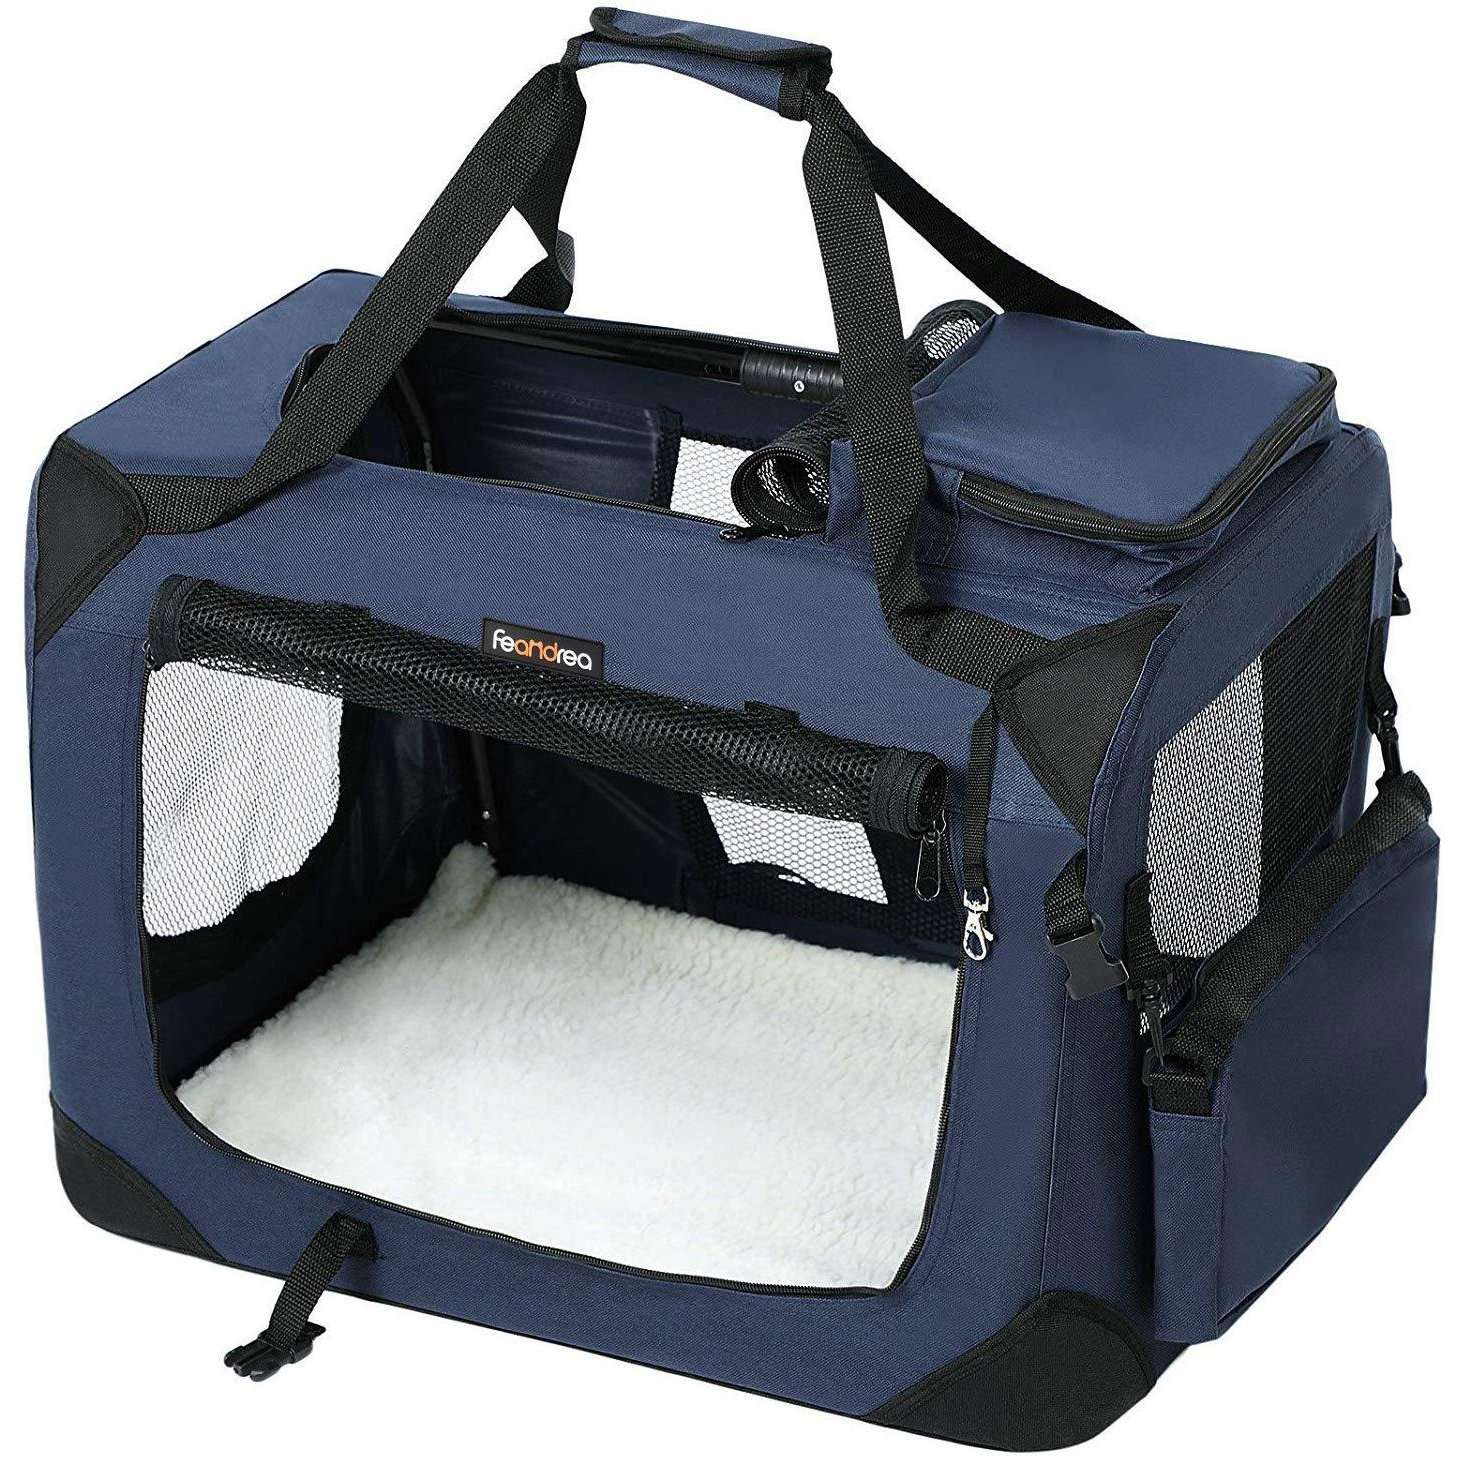 Nancy's Dog Box - Transport Box Car - Dog Transport Box - Foldable Cat Box - Dark Blue 60x40x40 cm